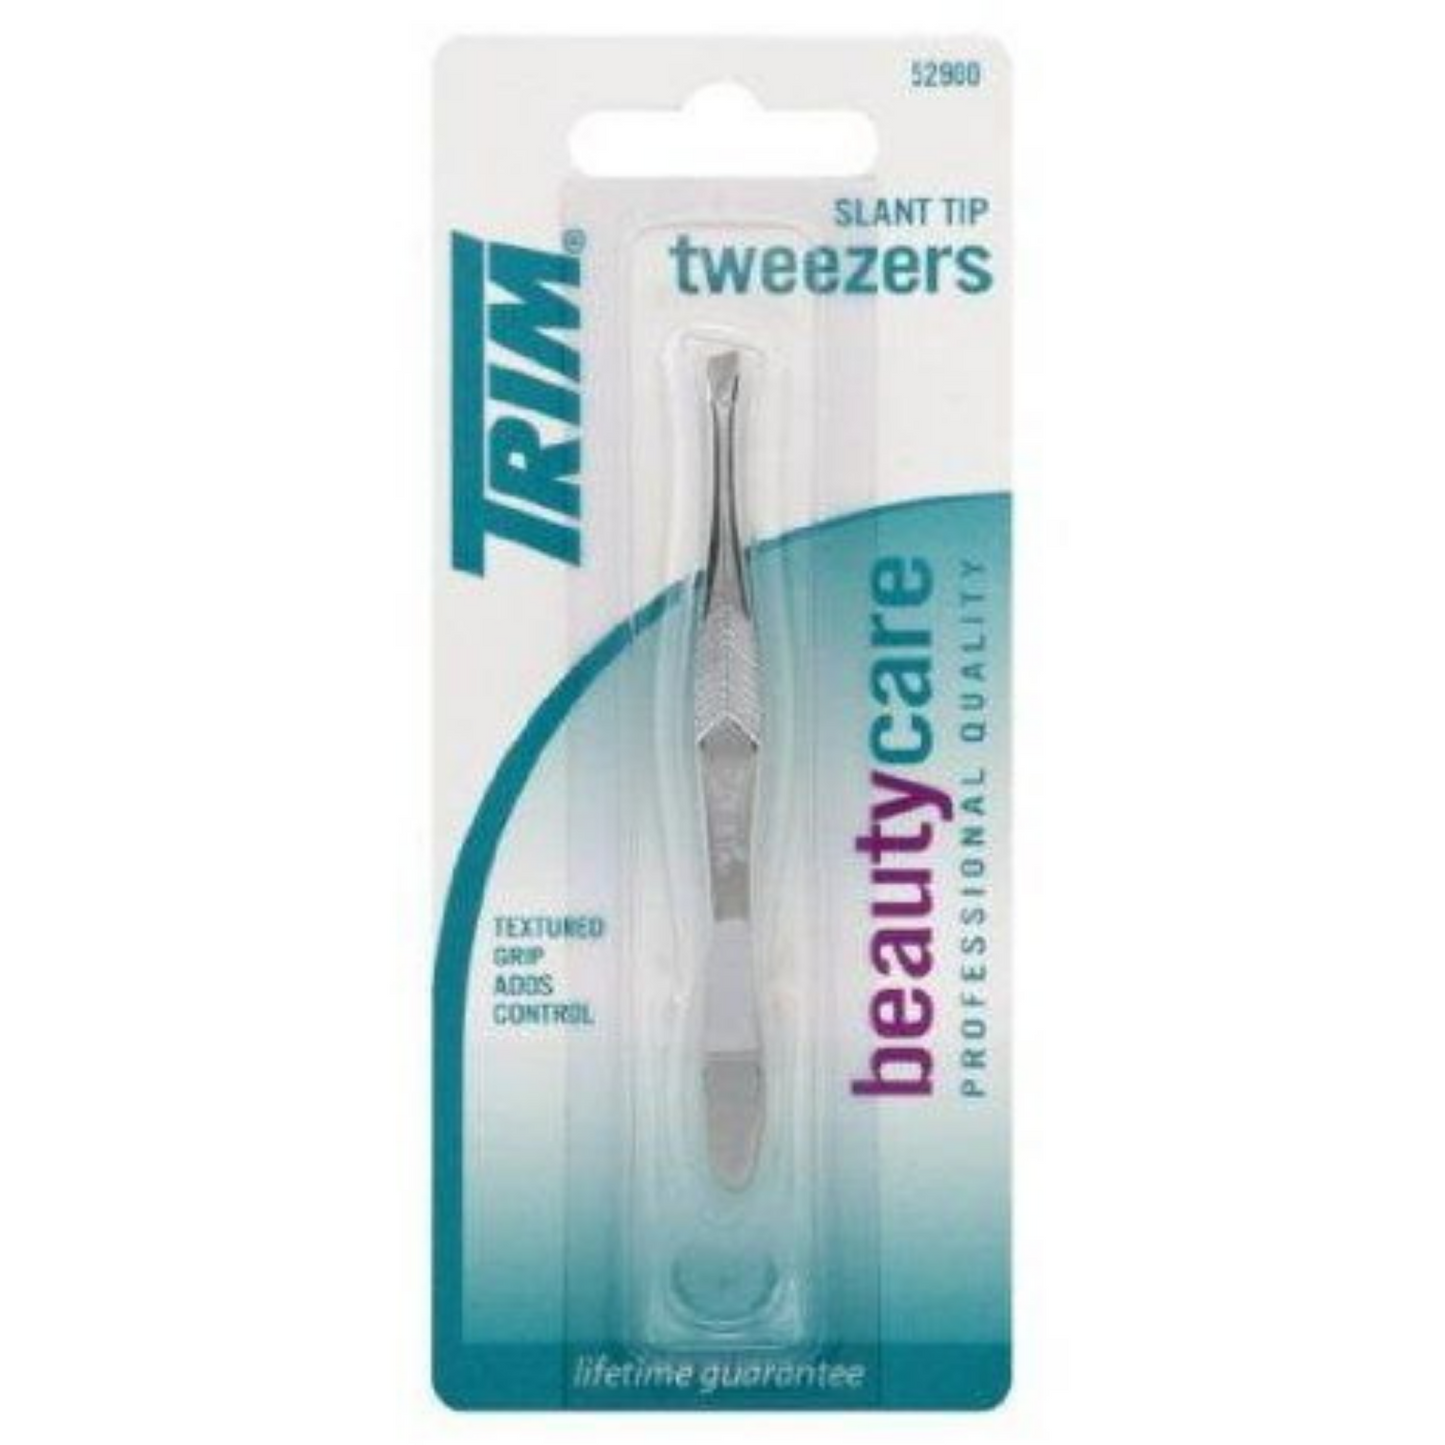 Trim Slaint Tip Tweezers - pack of 6